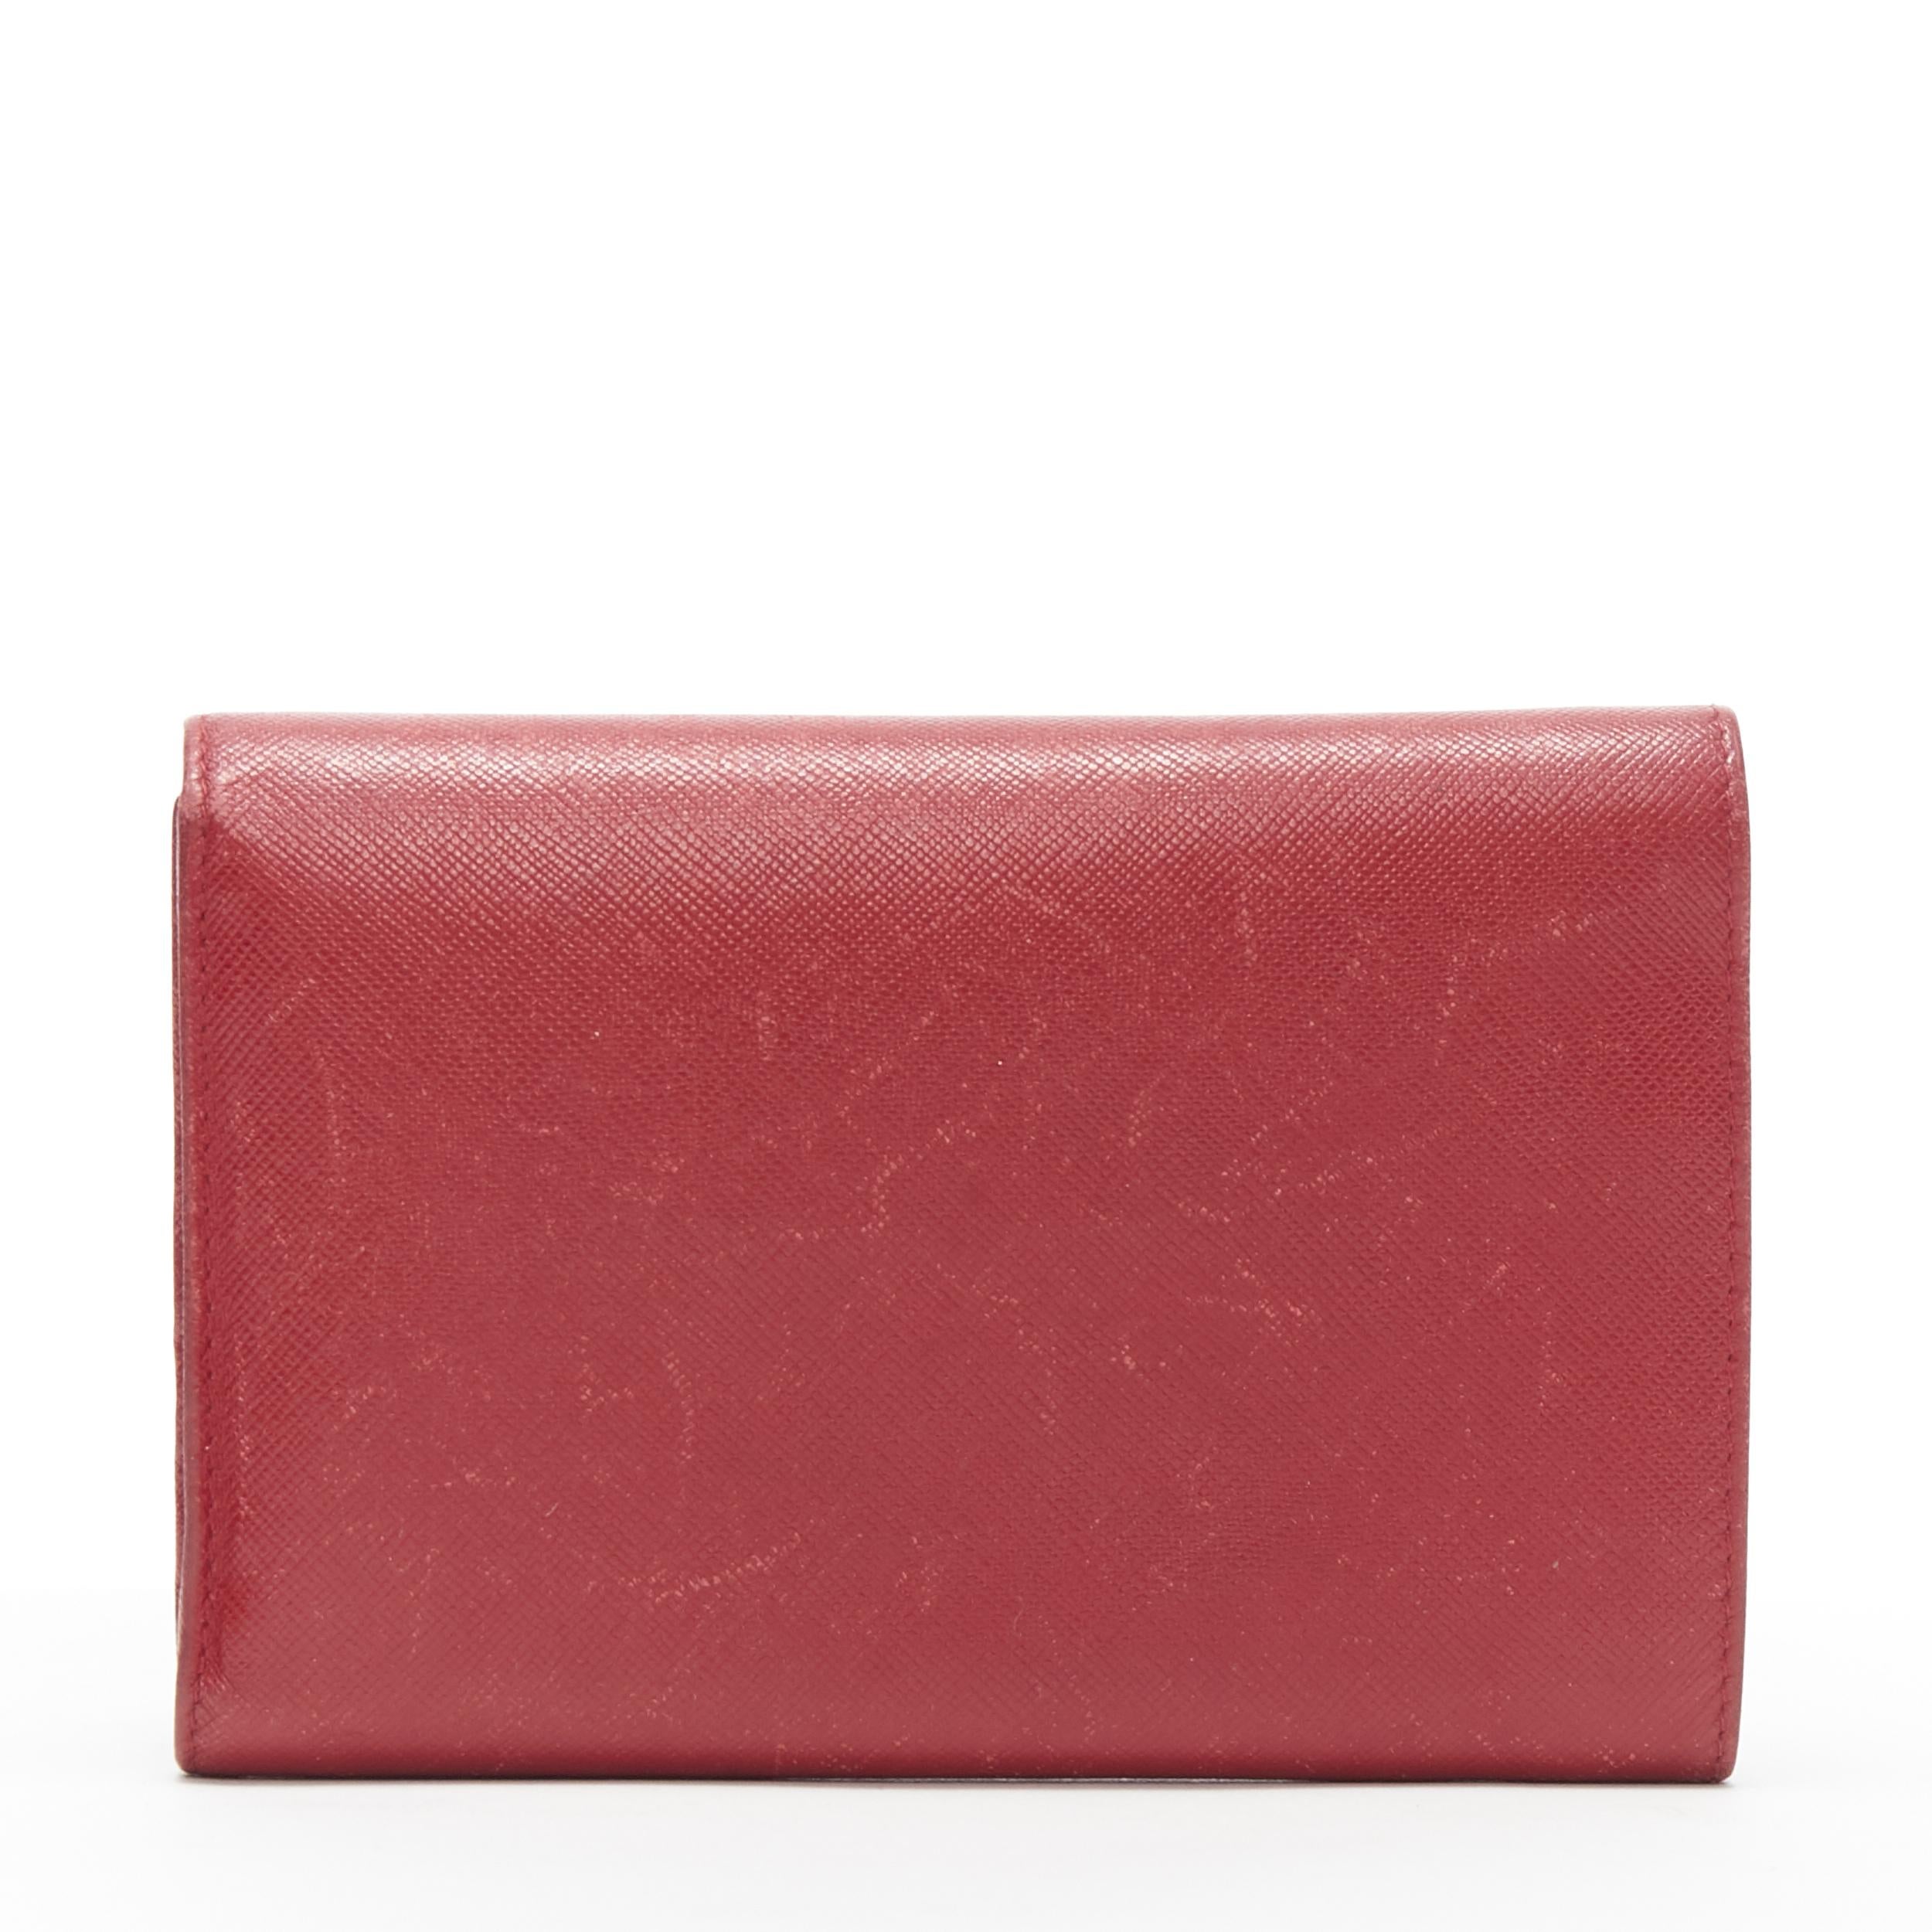 Red vintage PRADA red saffiano leather triangular plaque flap wallet